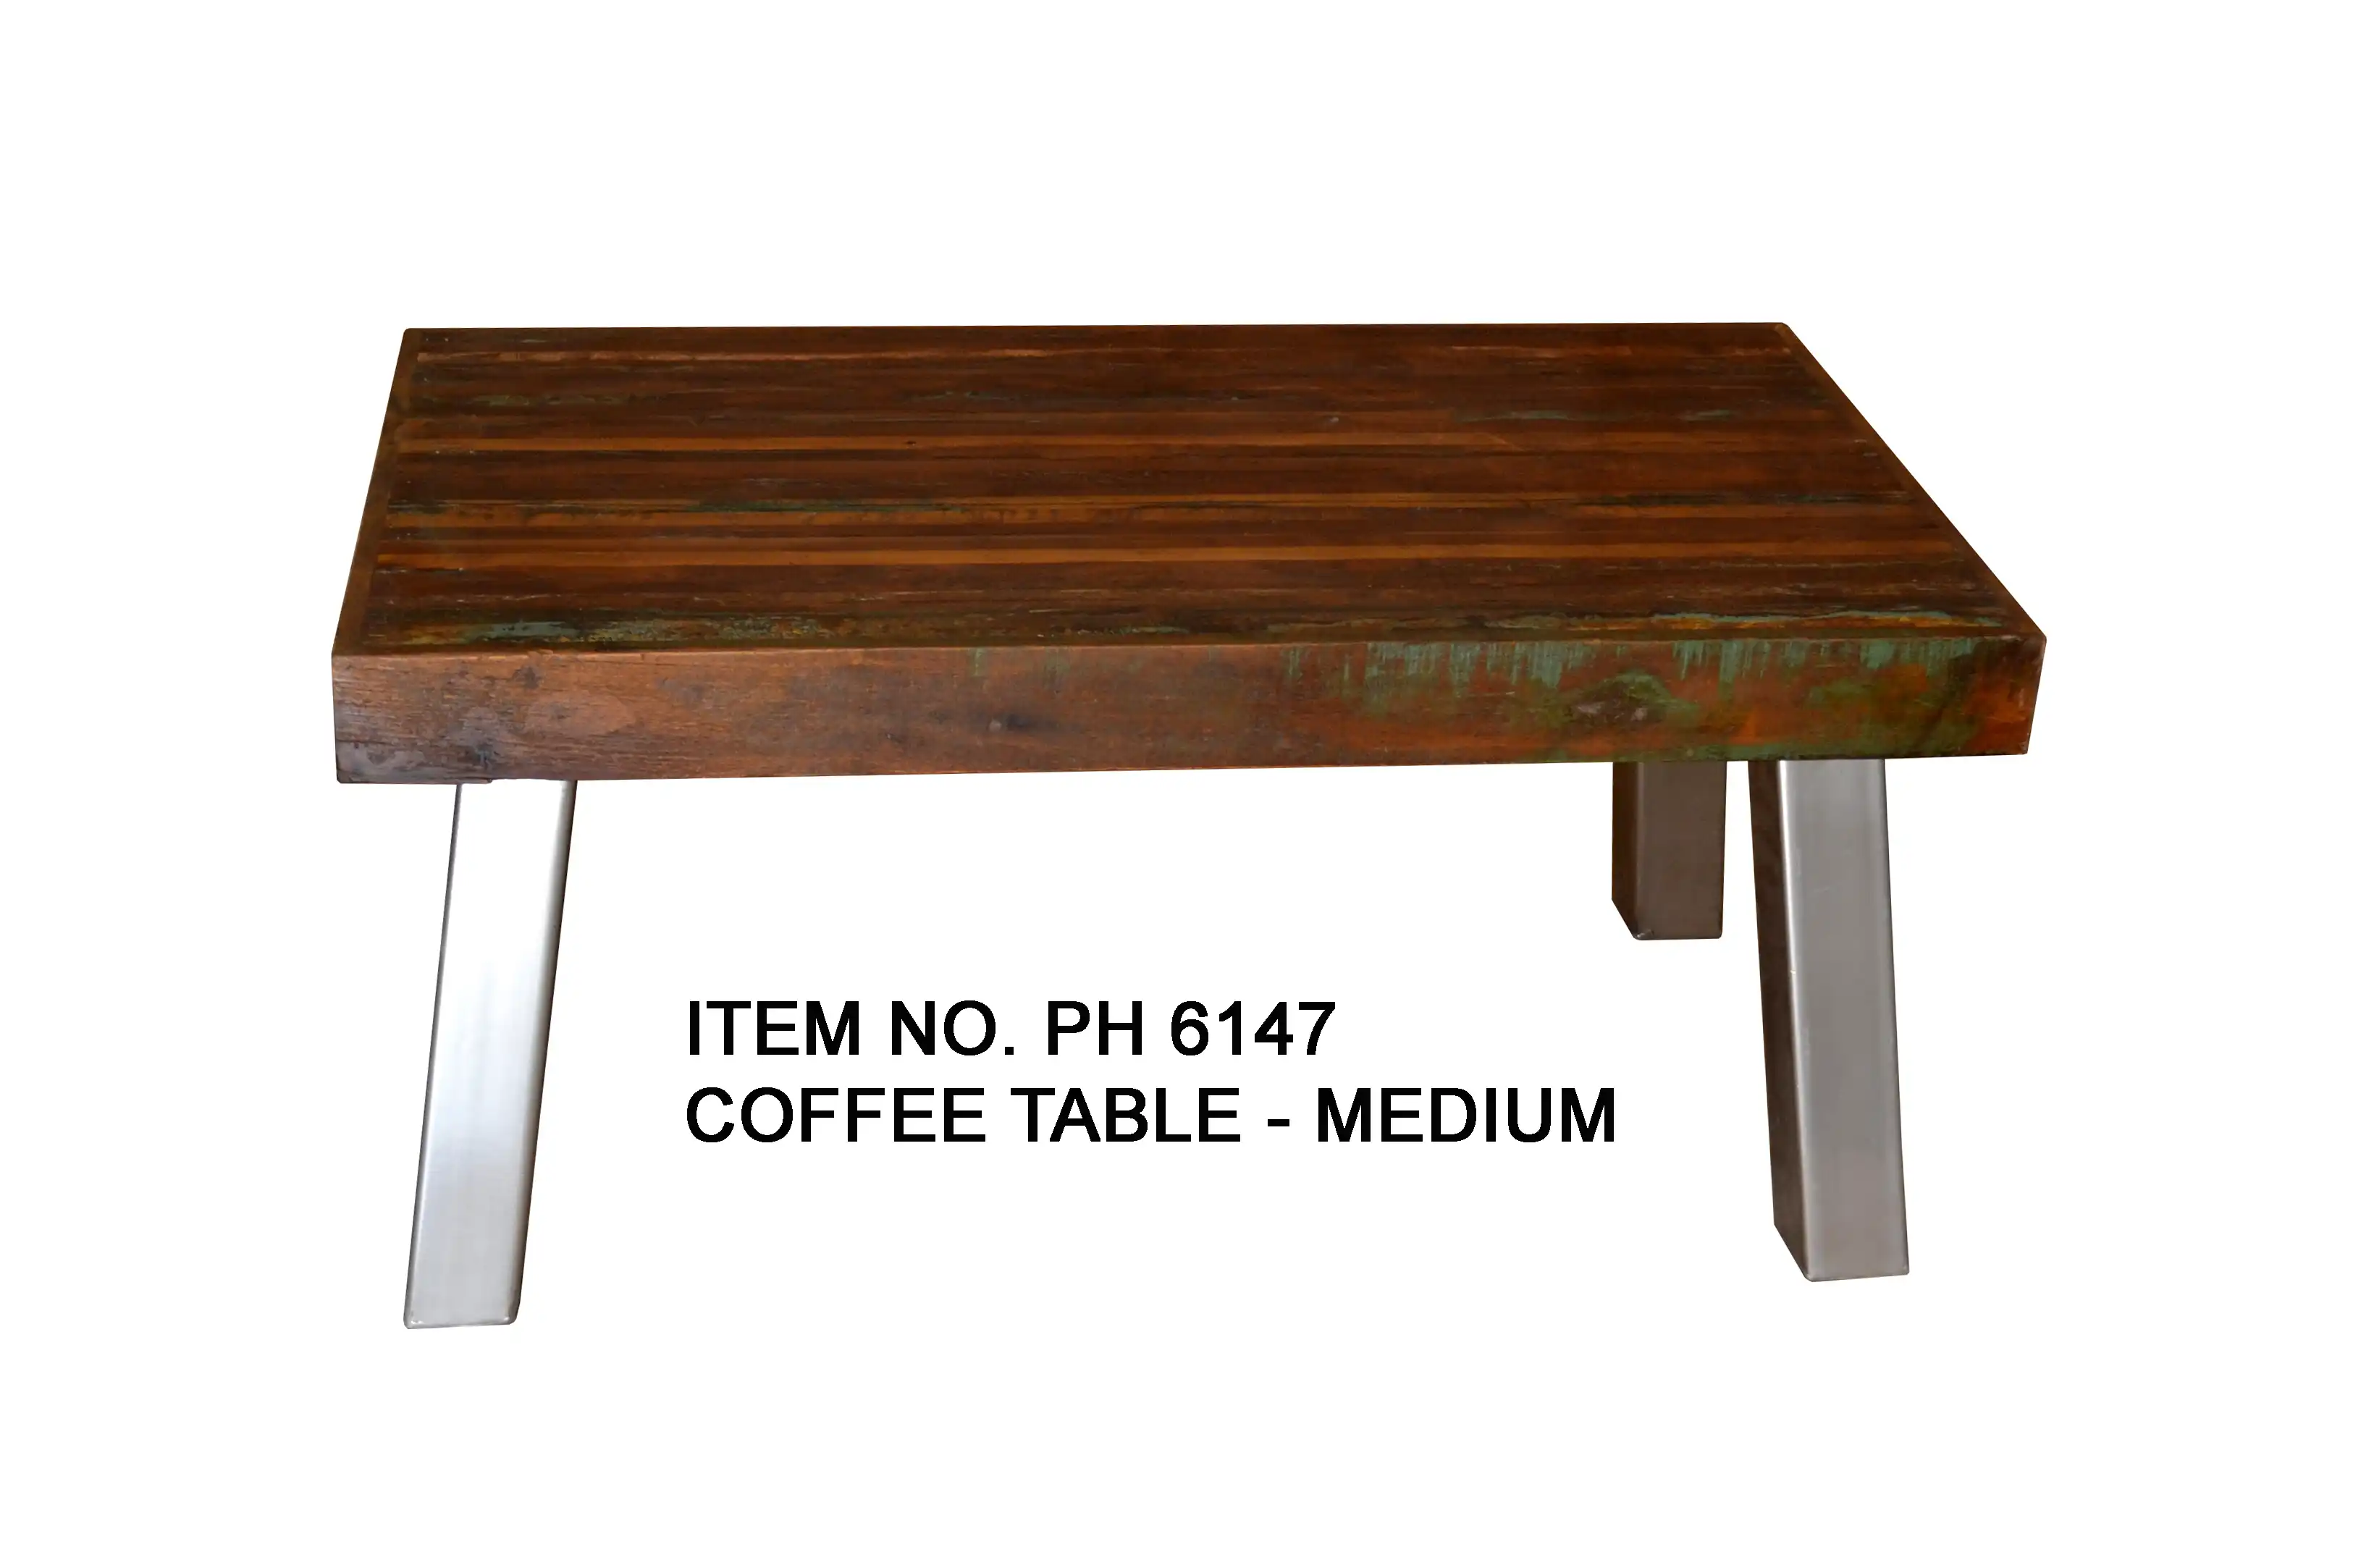 Reclaimed Wood Medium Coffee Table with Leg Iron (KD) - popular handicrafts